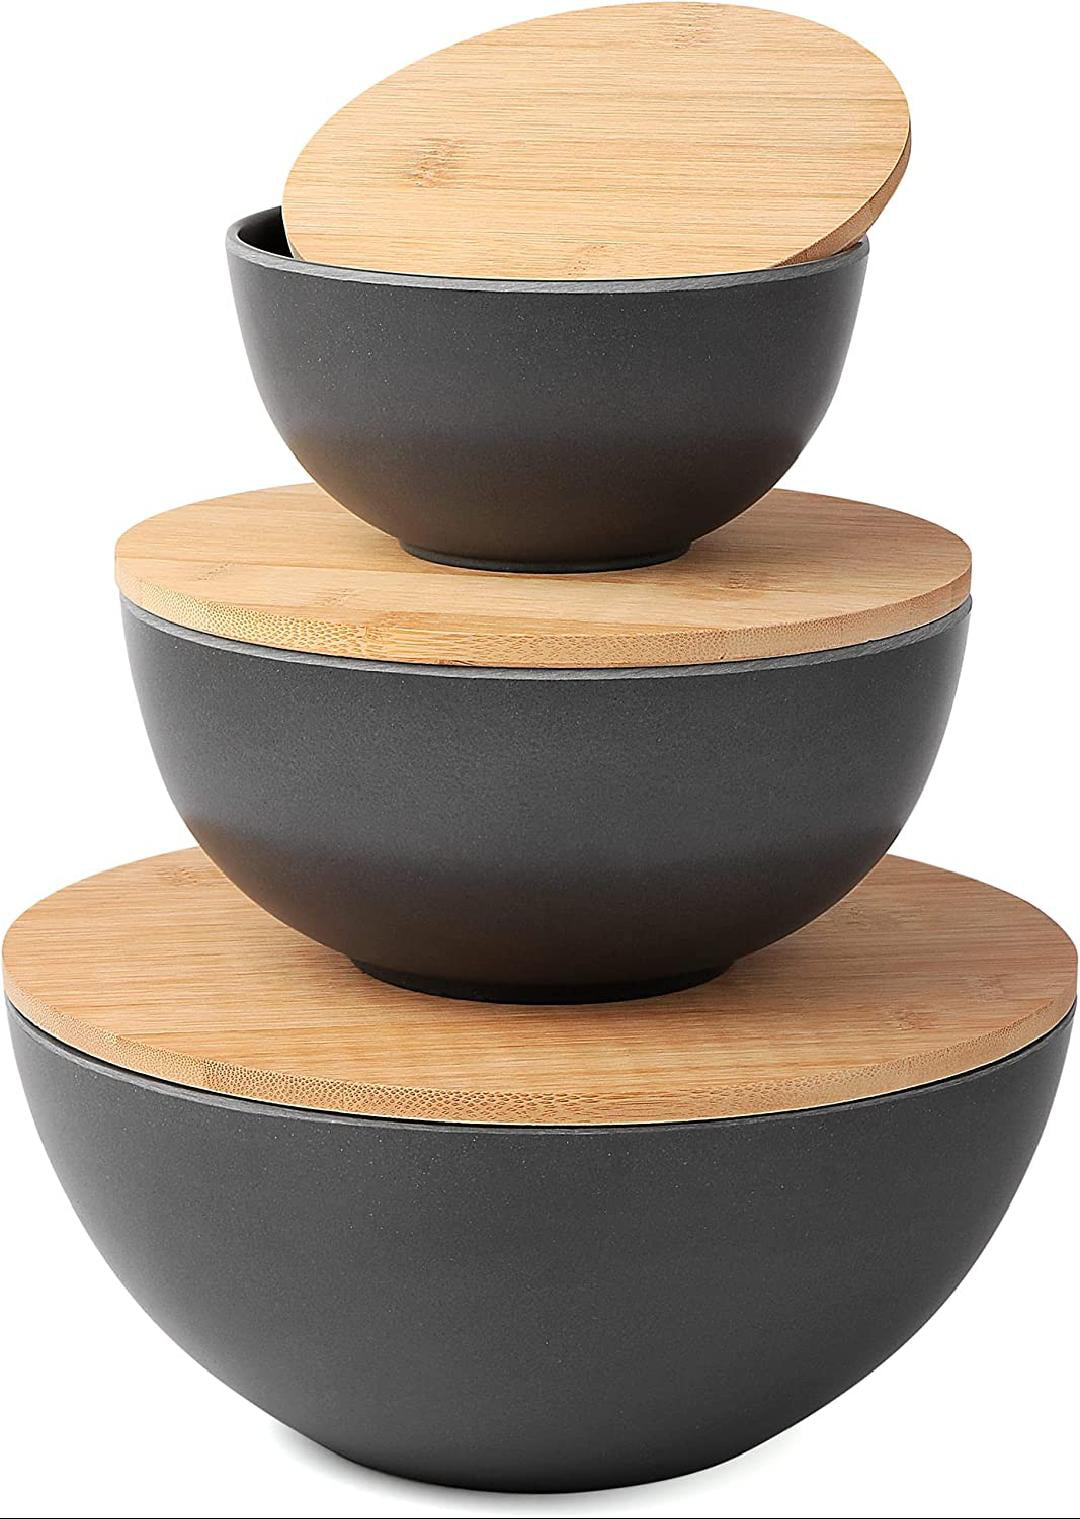 Aveco Biodegradable Reusable Bamboo Fiber Salad Bowl Kitchen Bowl Set with  Wood Lid - China Biodegradable Bowl and Eco-Friendly Salad Bowl price